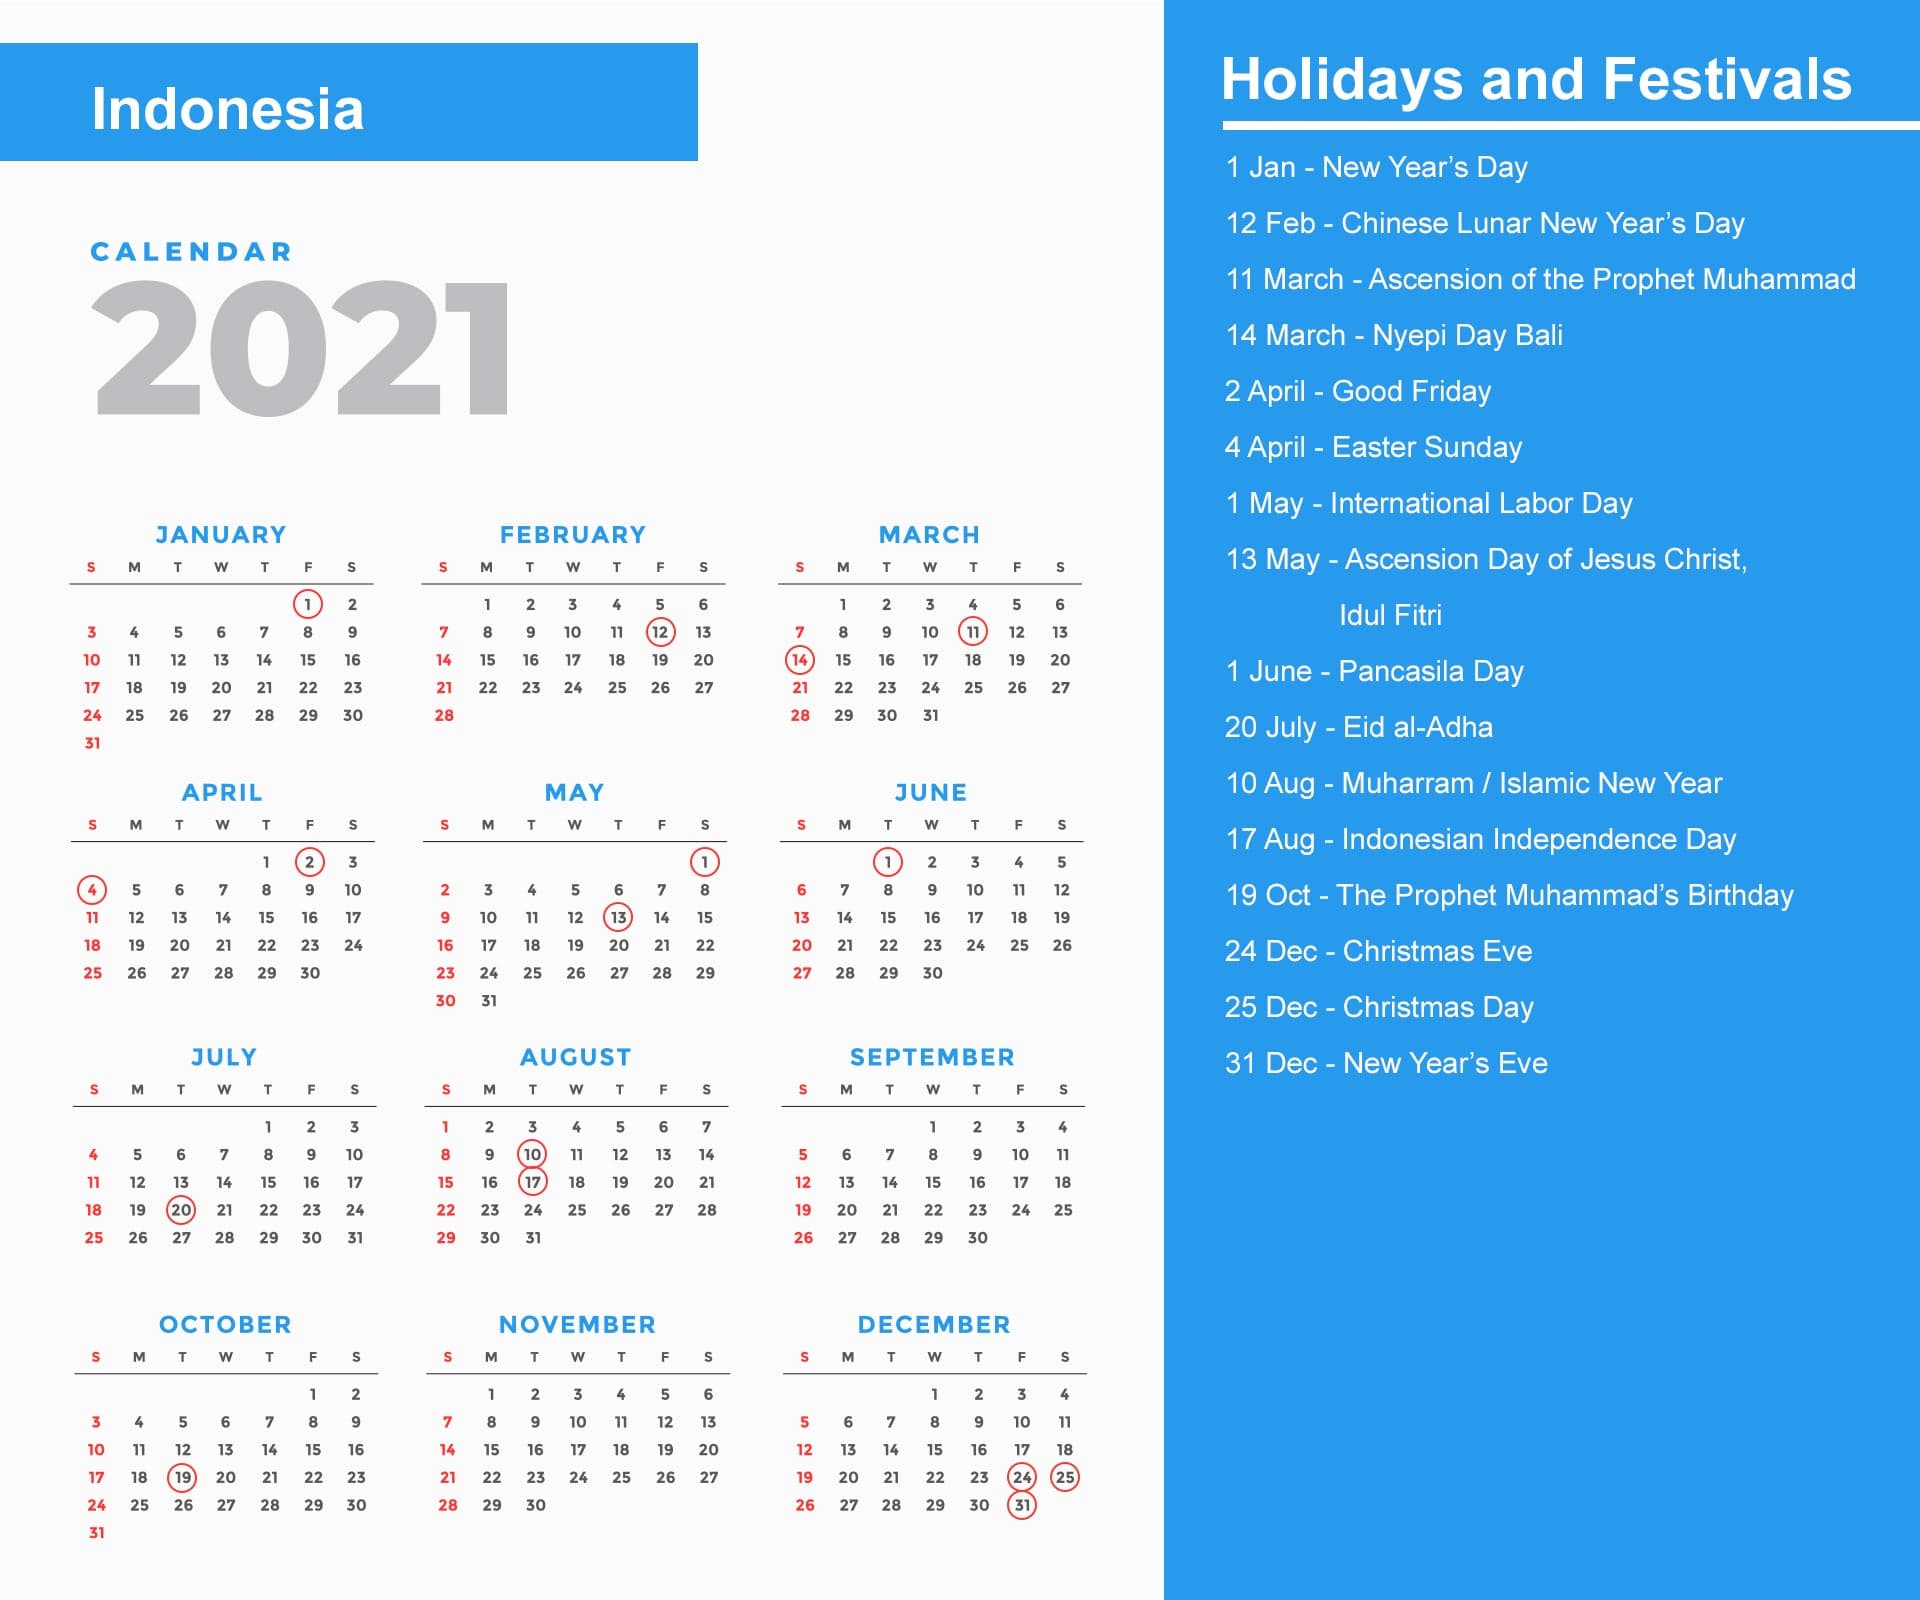 Indonesia Holidays Calendar 2021